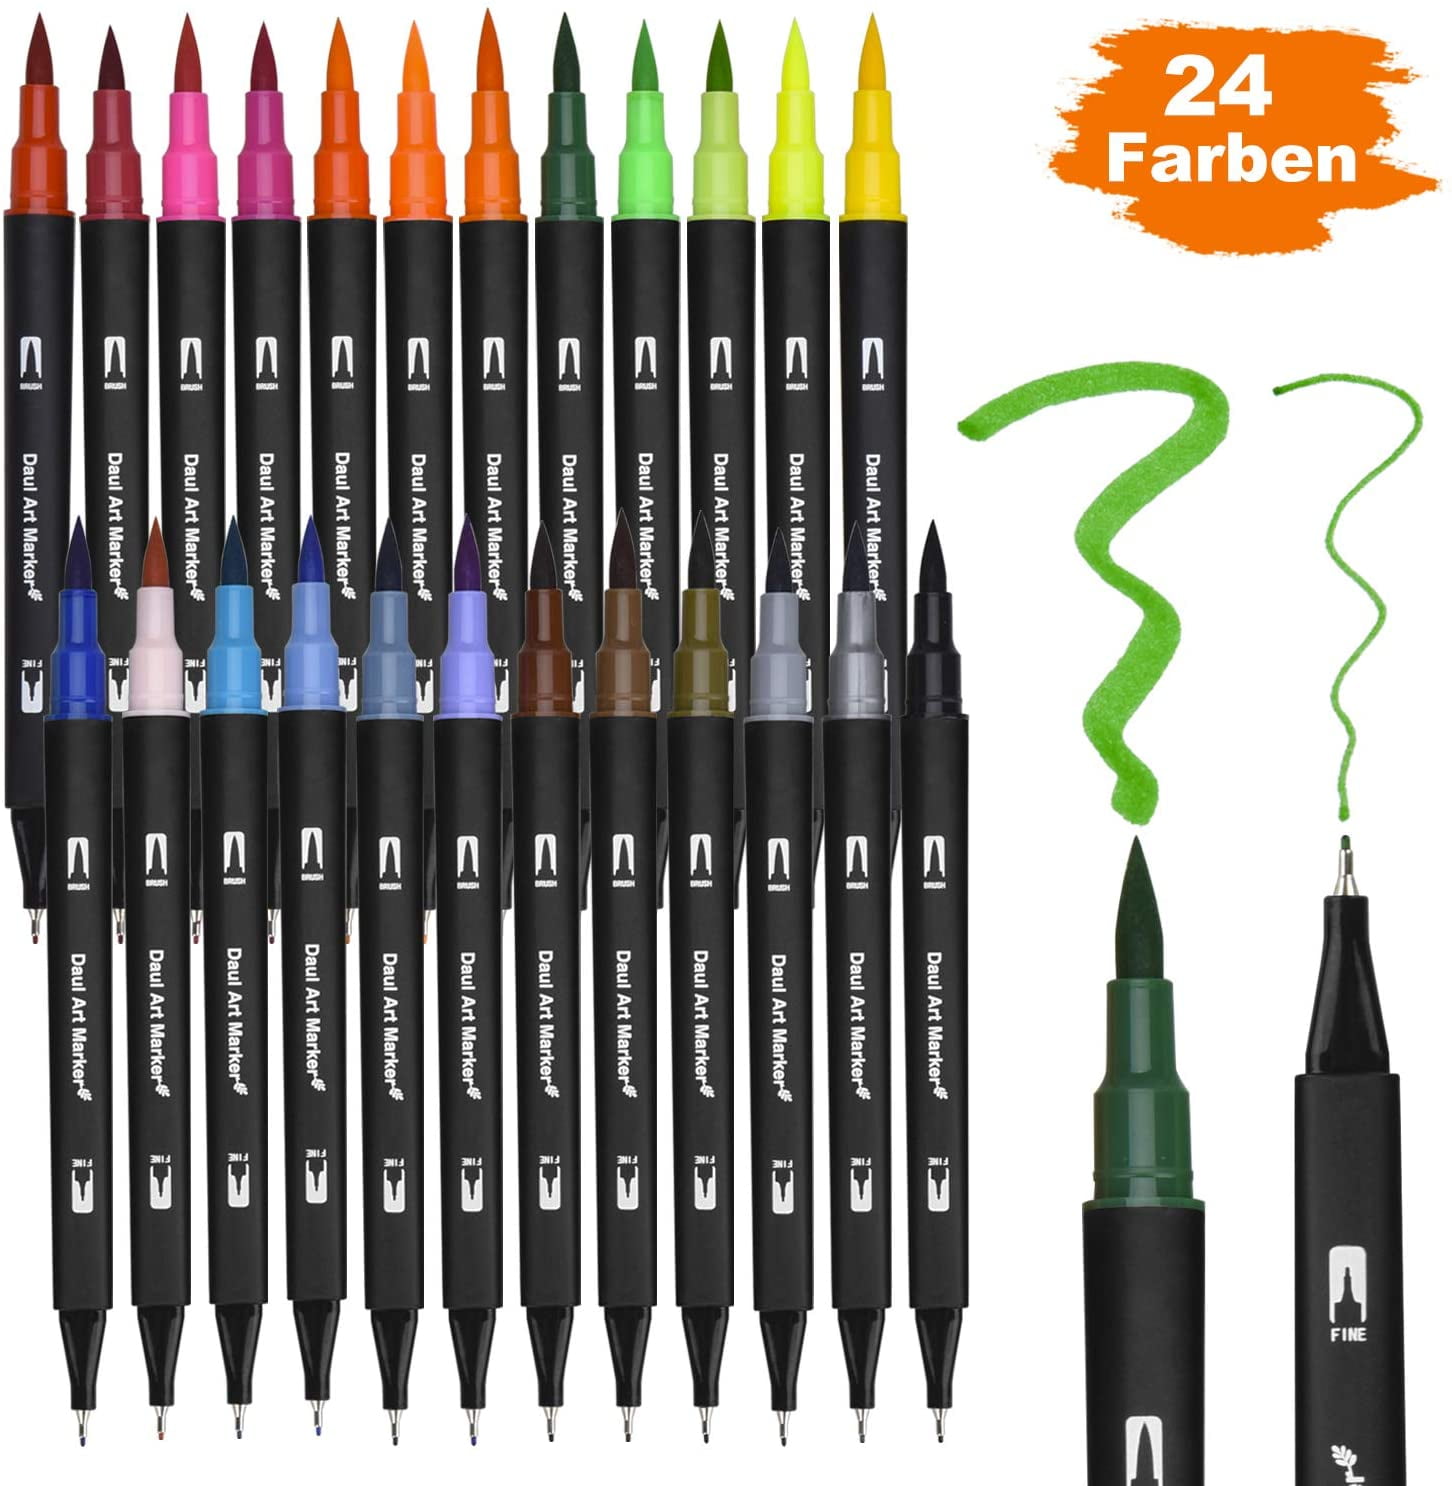 Dual Tip Brush Pens Art Markers Set for Coloring,48 Colors Brush Fine Tip Pen for Coloring Book Beginner Journal Planner Card Making Kids Drawing Pens Kit Art Craft Supplies